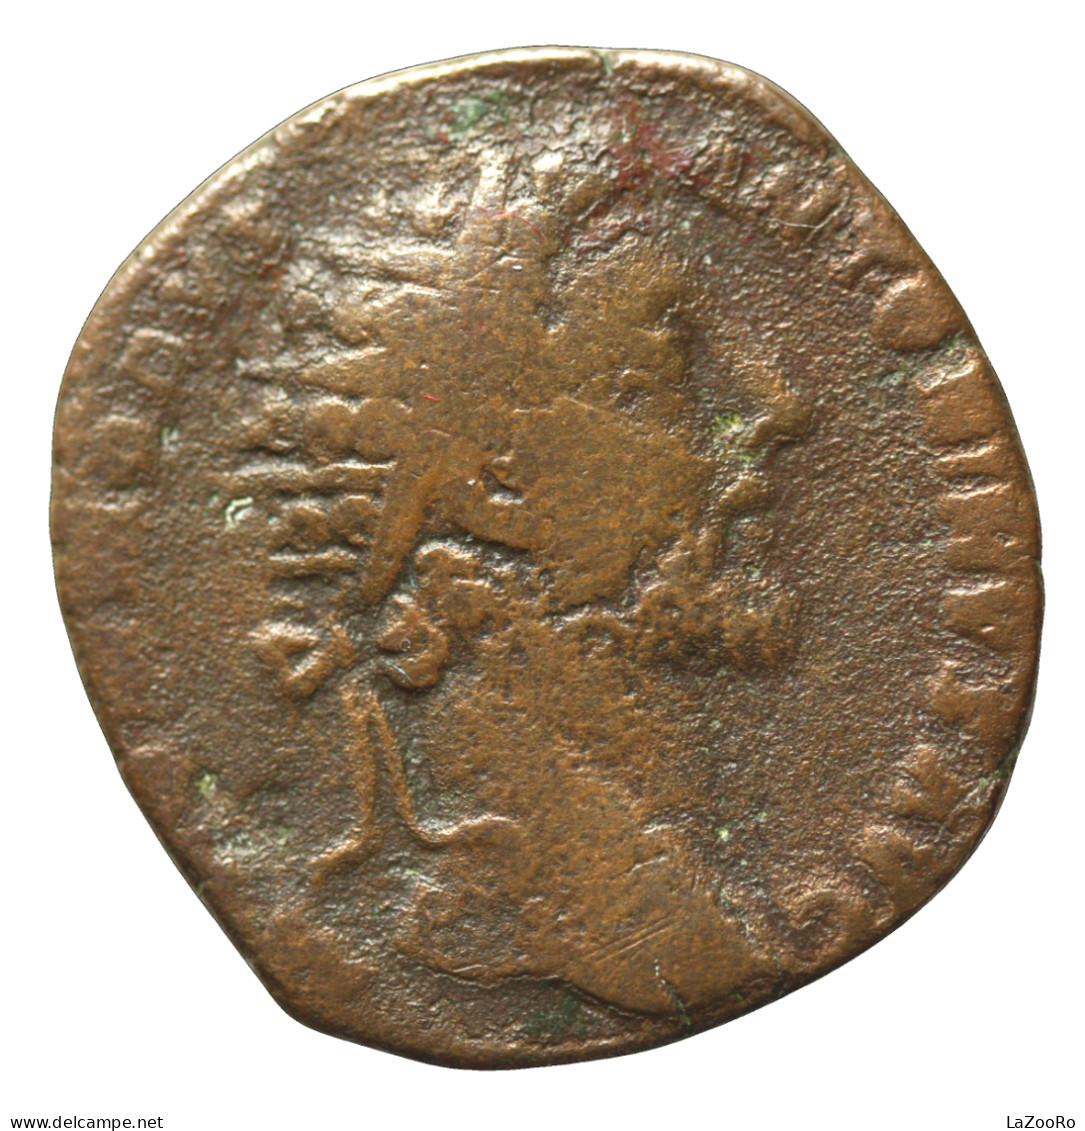 LaZooRo: Roman Empire - AE Sestertius Of Commodus (177-192 AD), Roma - The Anthonines (96 AD To 192 AD)